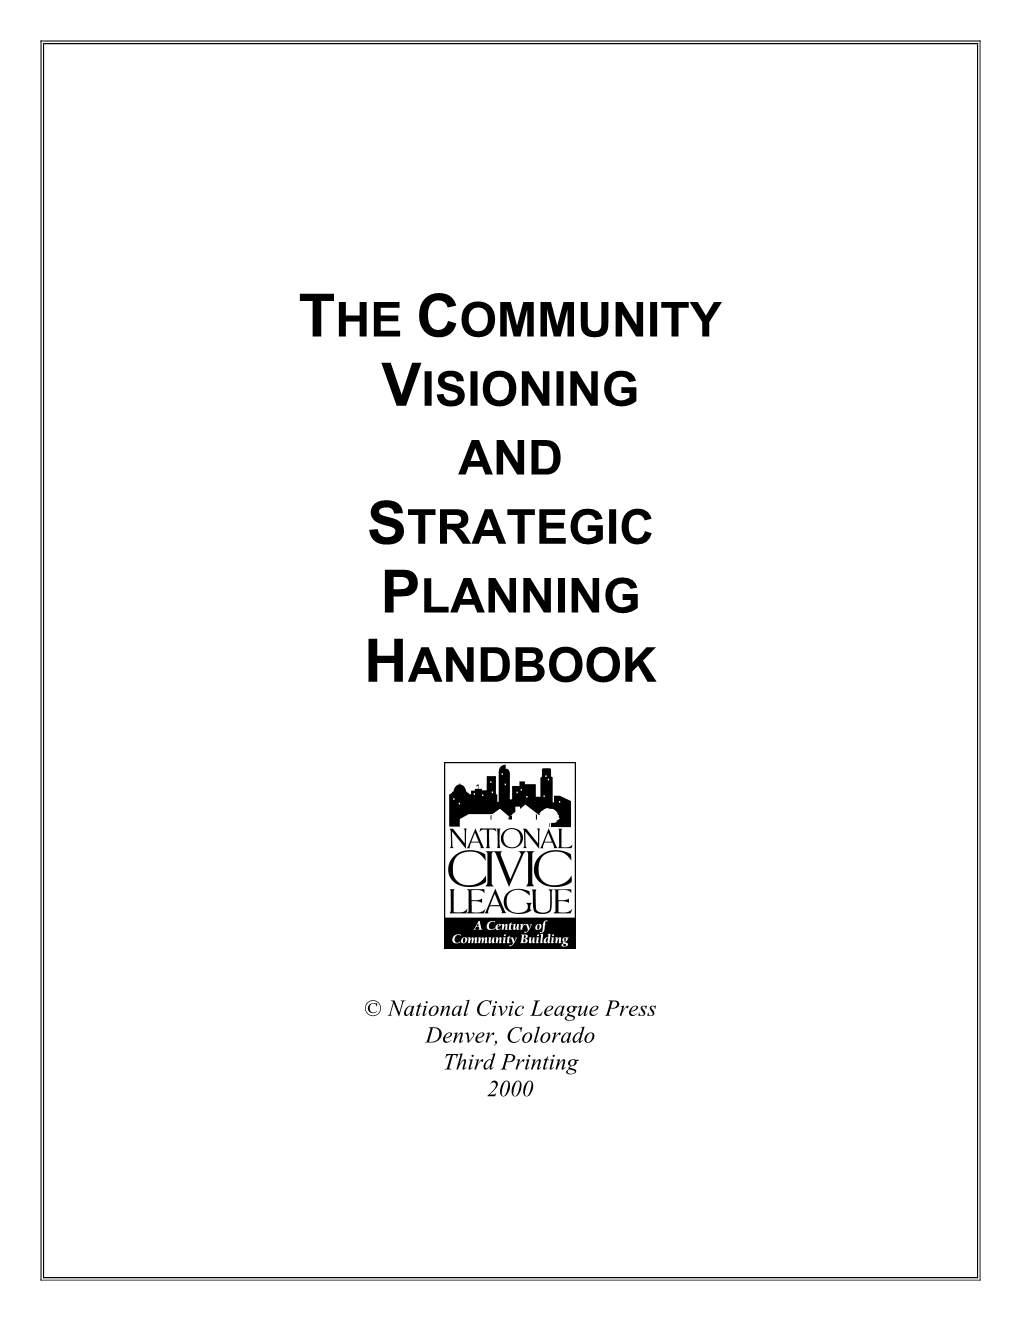 The Community Visioning and Strategic Planning Handbook